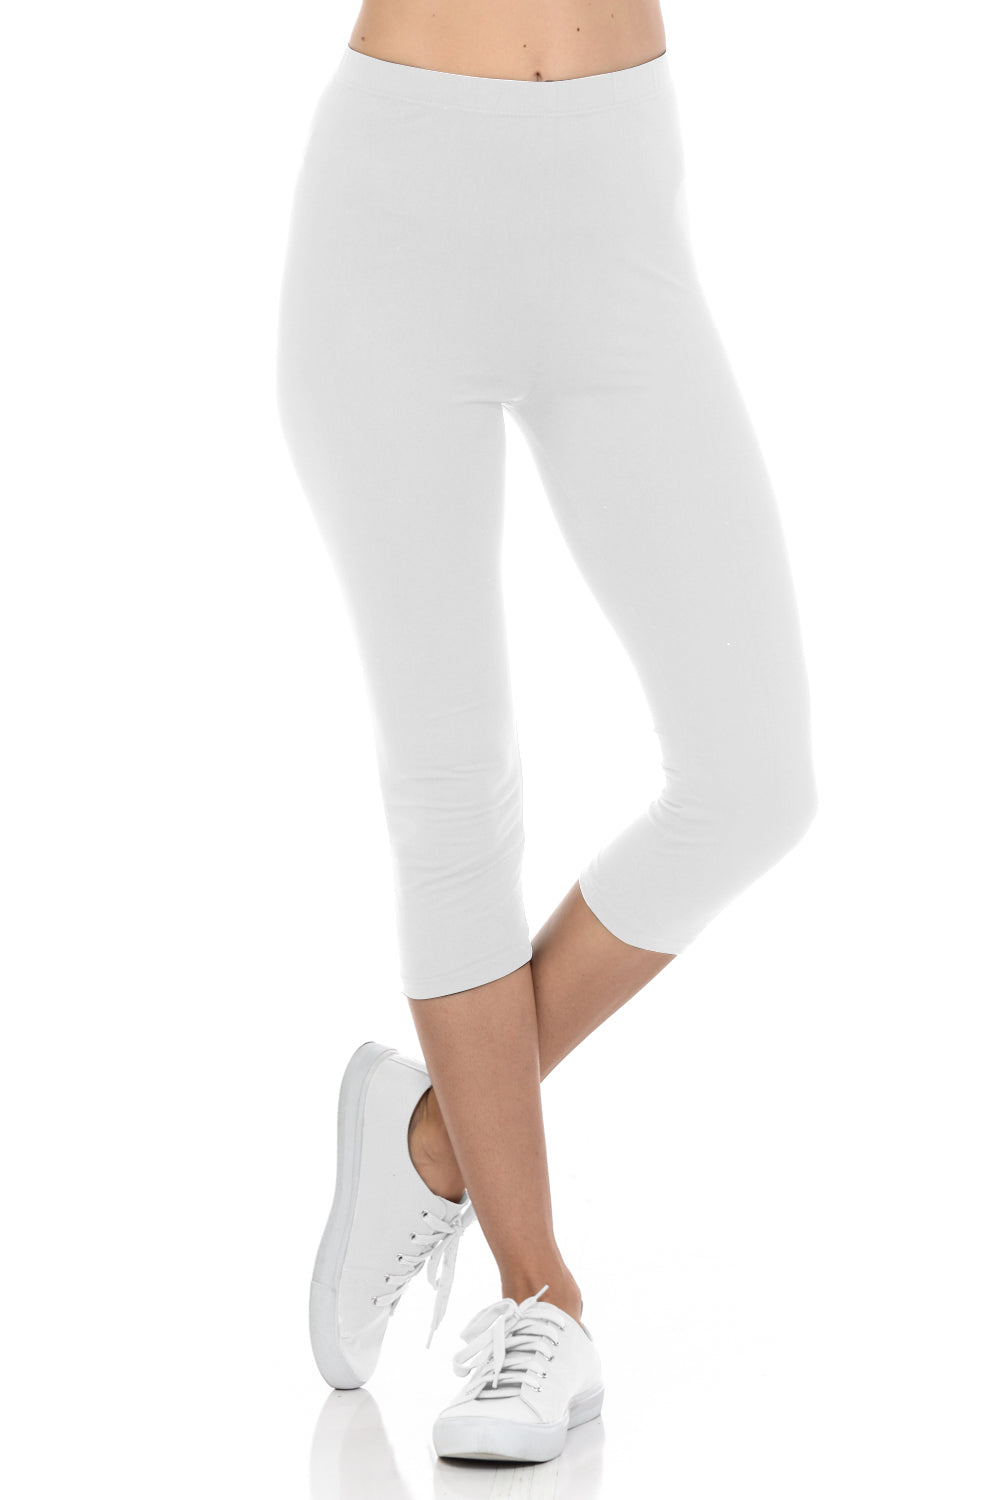 bluensquare LEGGINGS for Juniors High Waist Premium Soft Stretched Regular One Size-White Capri